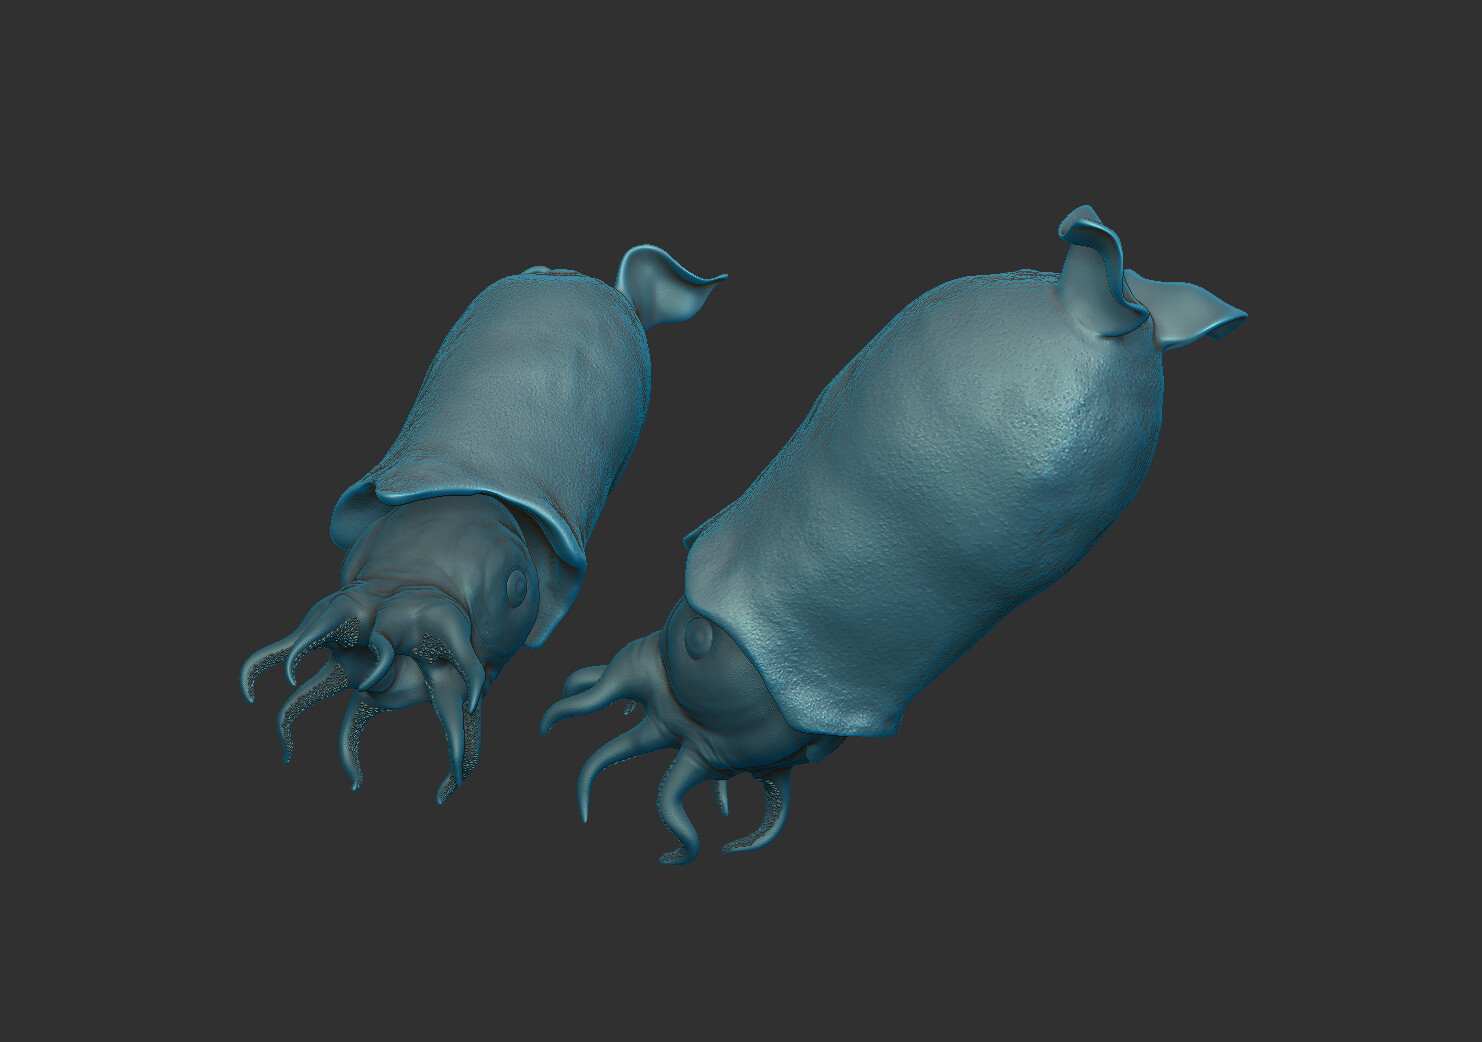 ZBrush render of final squid model